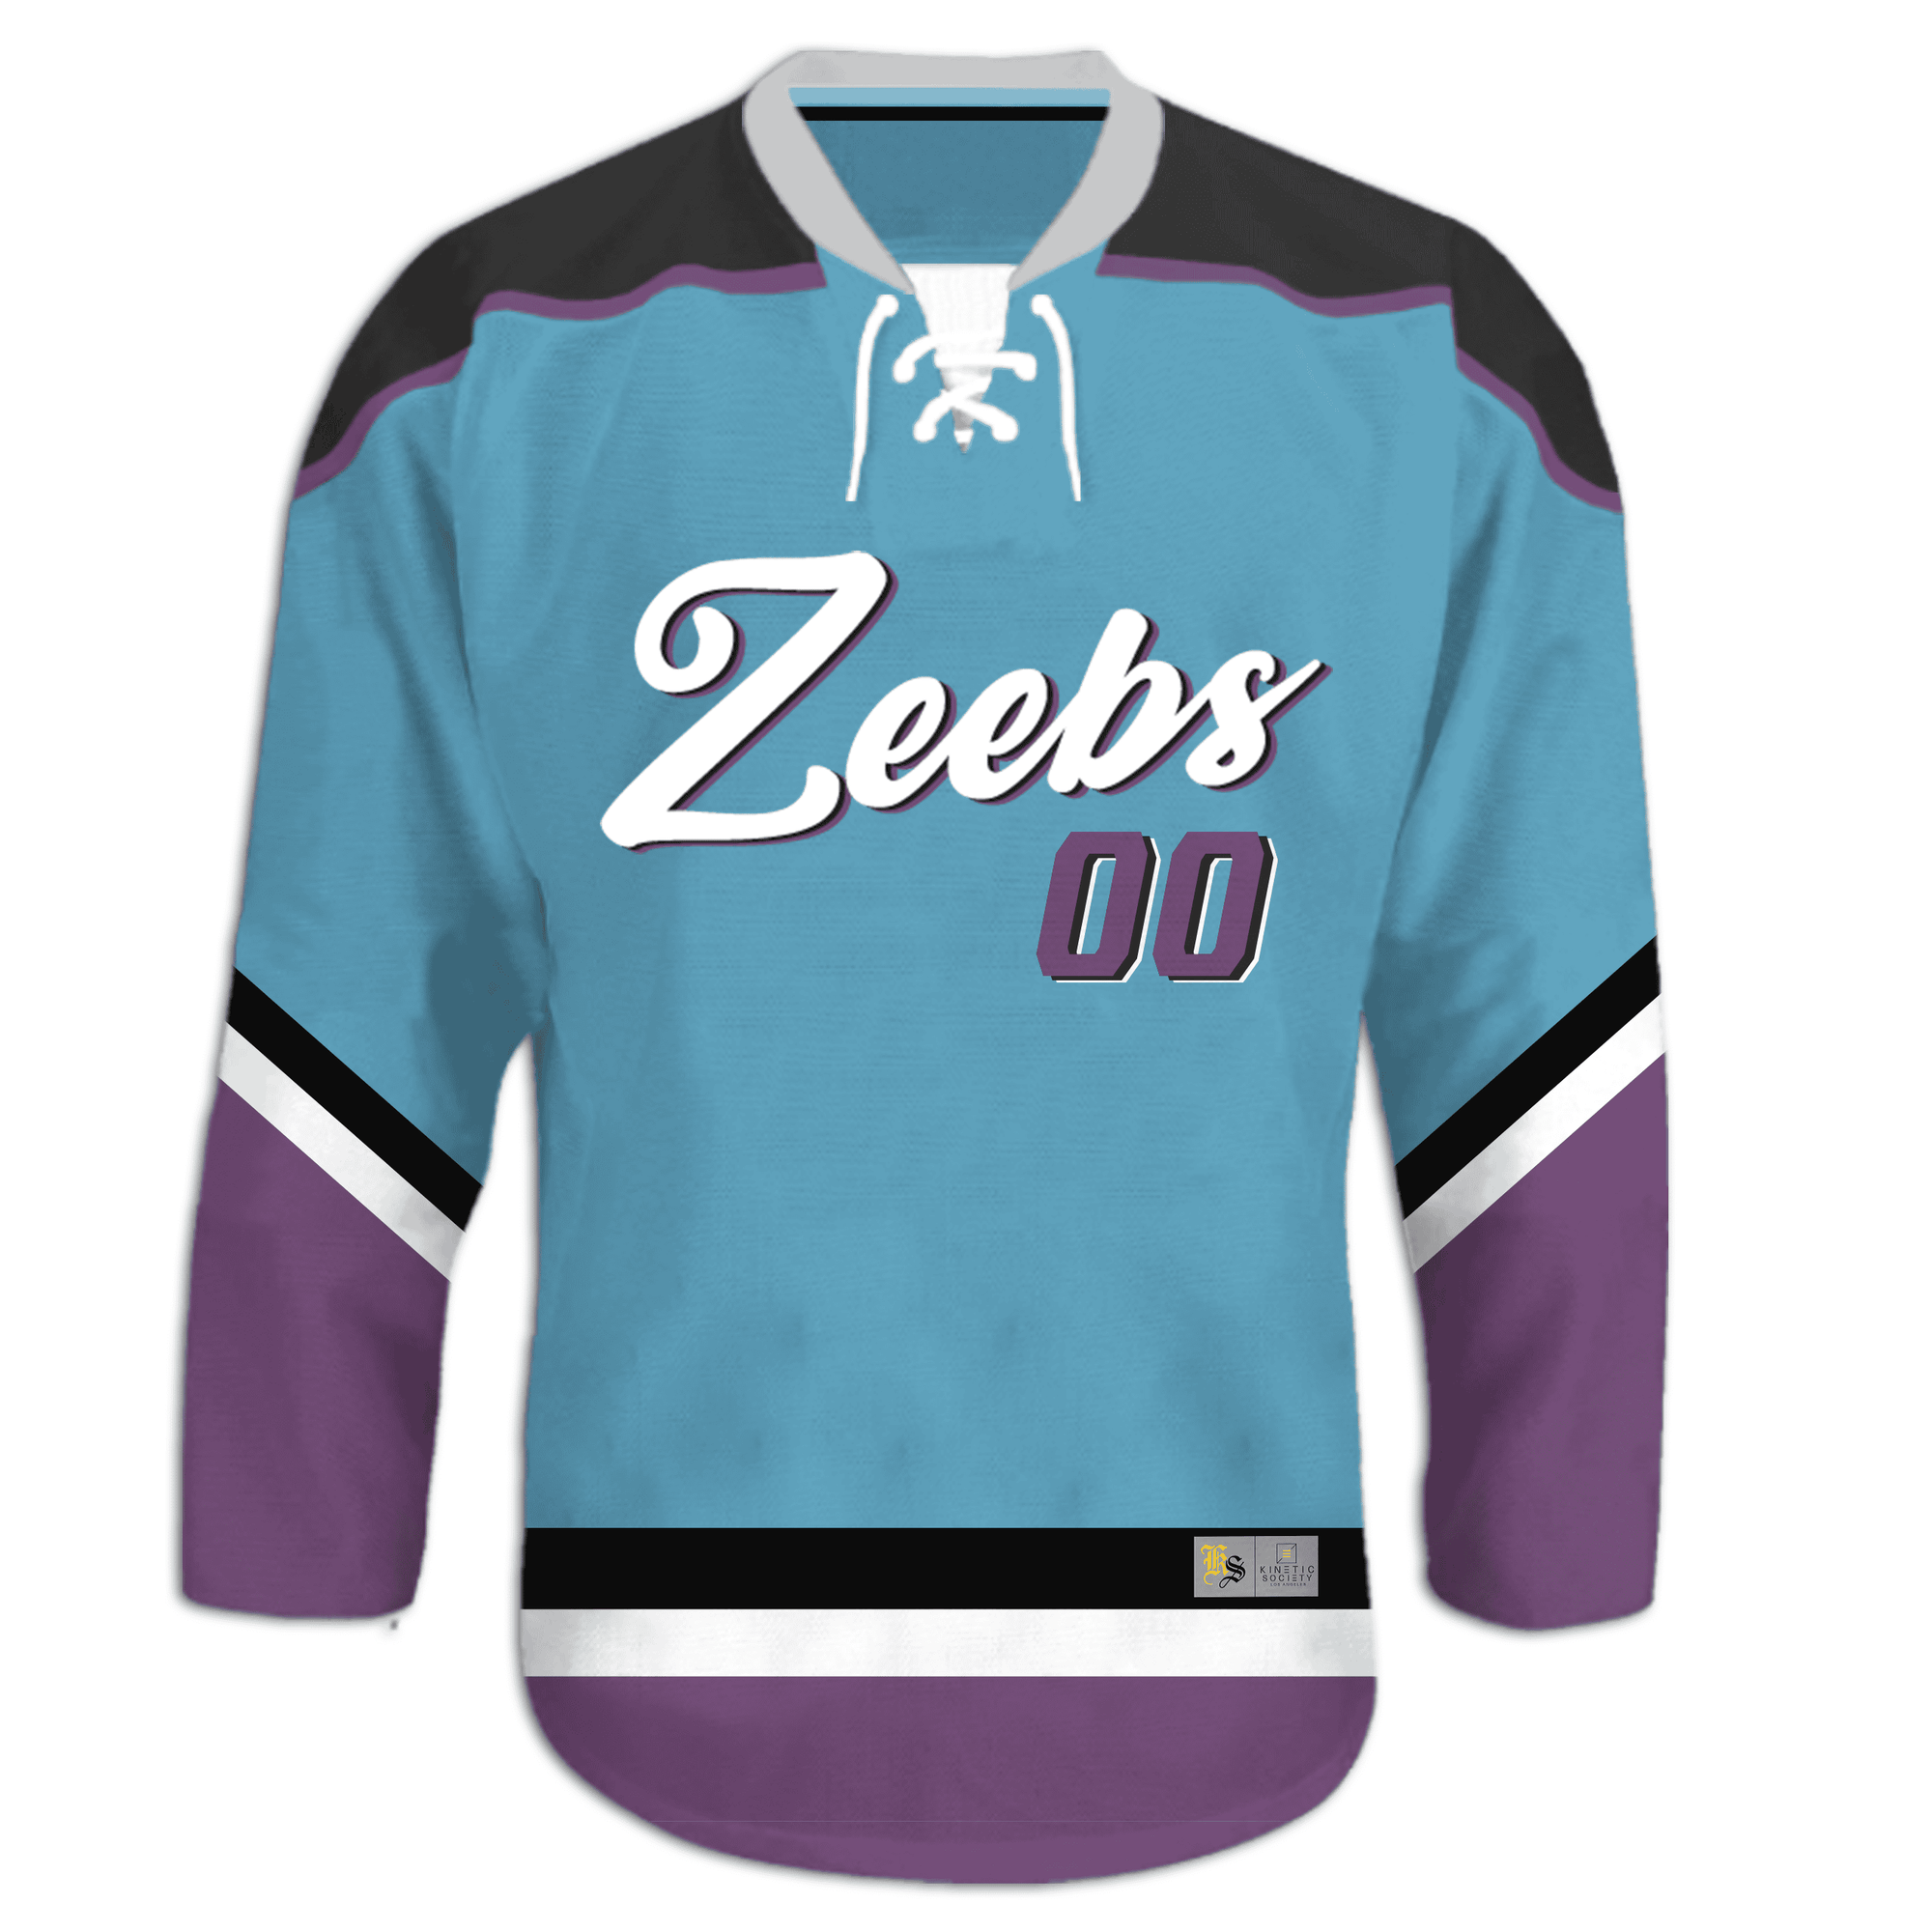 Zeta Beta Tau - Kratos Hockey Jersey